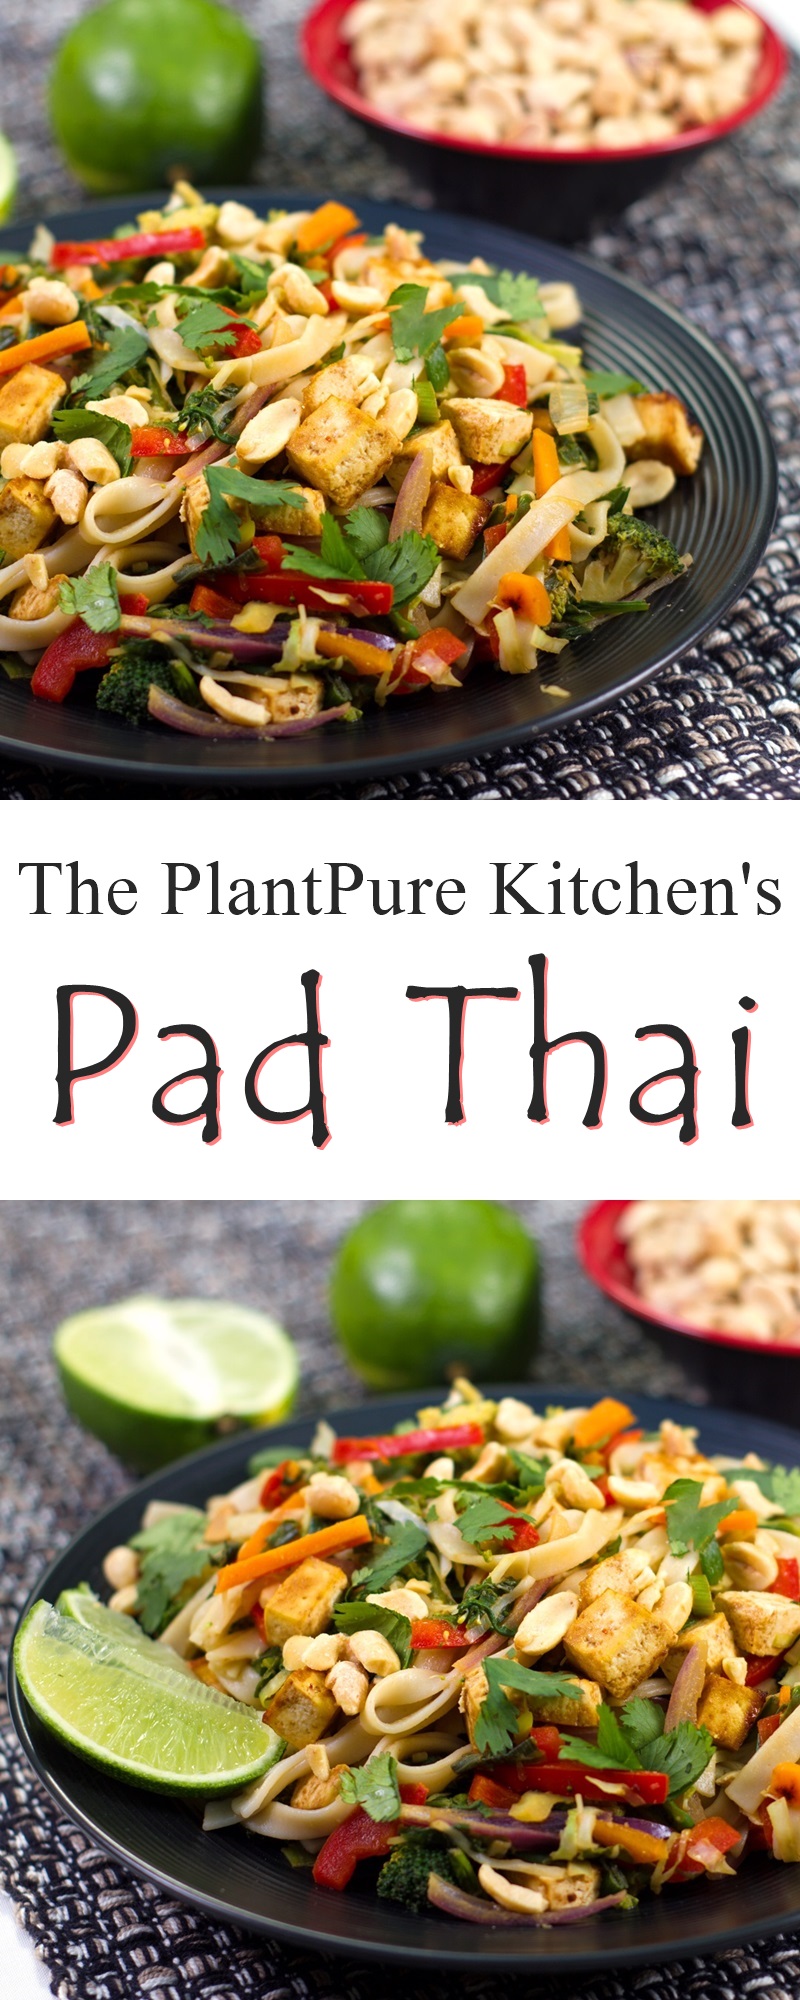 Vegan Pad Thai